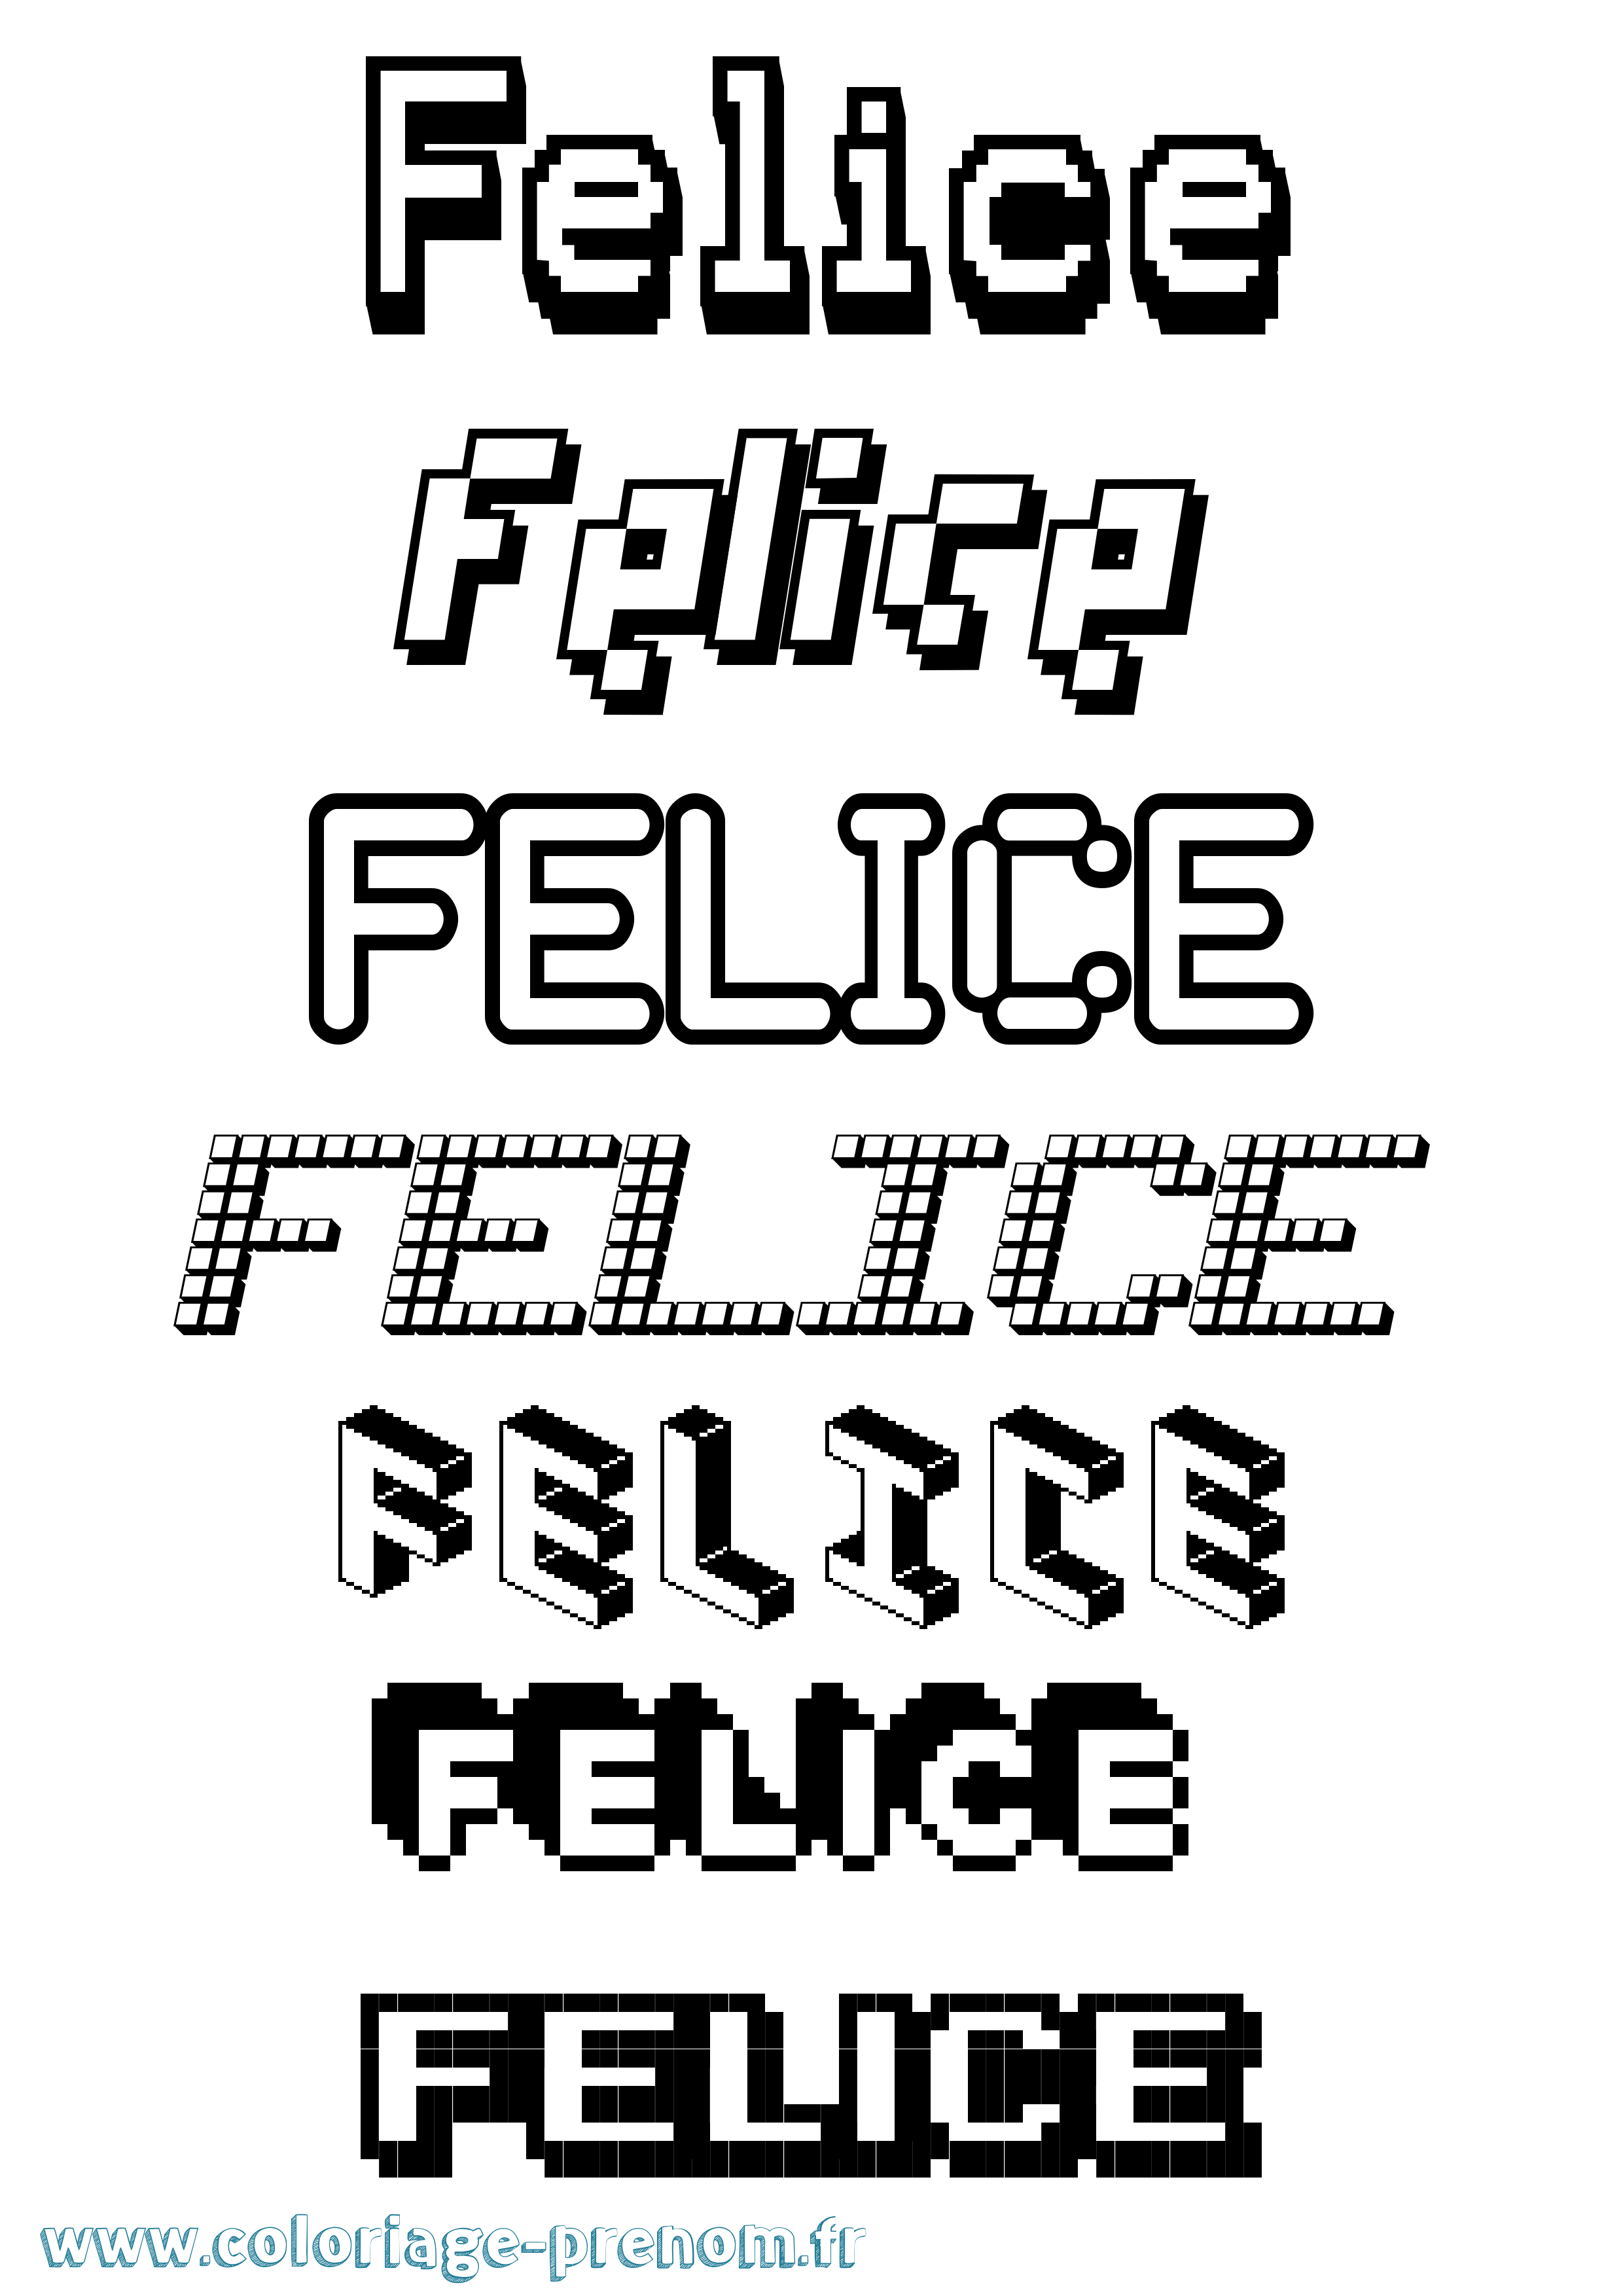 Coloriage prénom Felice Pixel